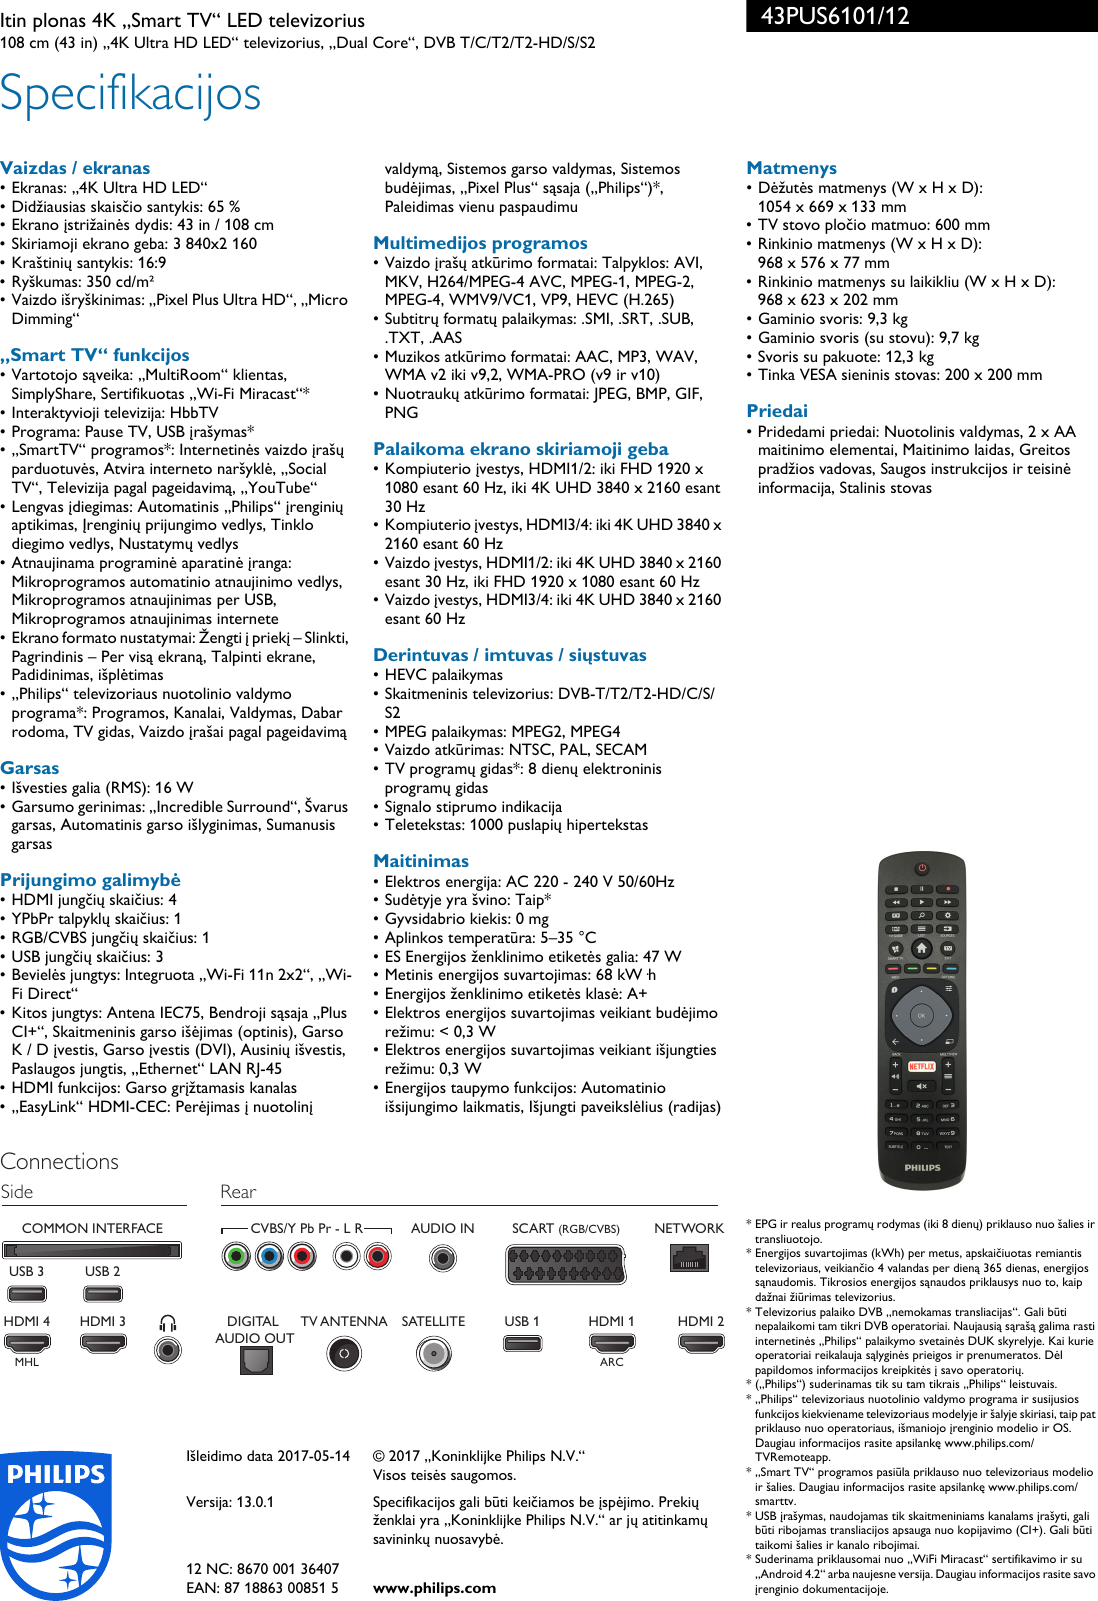 Page 3 of 3 - Philips 43PUS6101/12 Itin Plonas 4K „Smart TV“ LED Televizorius Su „Pixel Plus Ultra HD“ User Manual Informacinis Lapelis 43pus6101 12 Pss Litlt